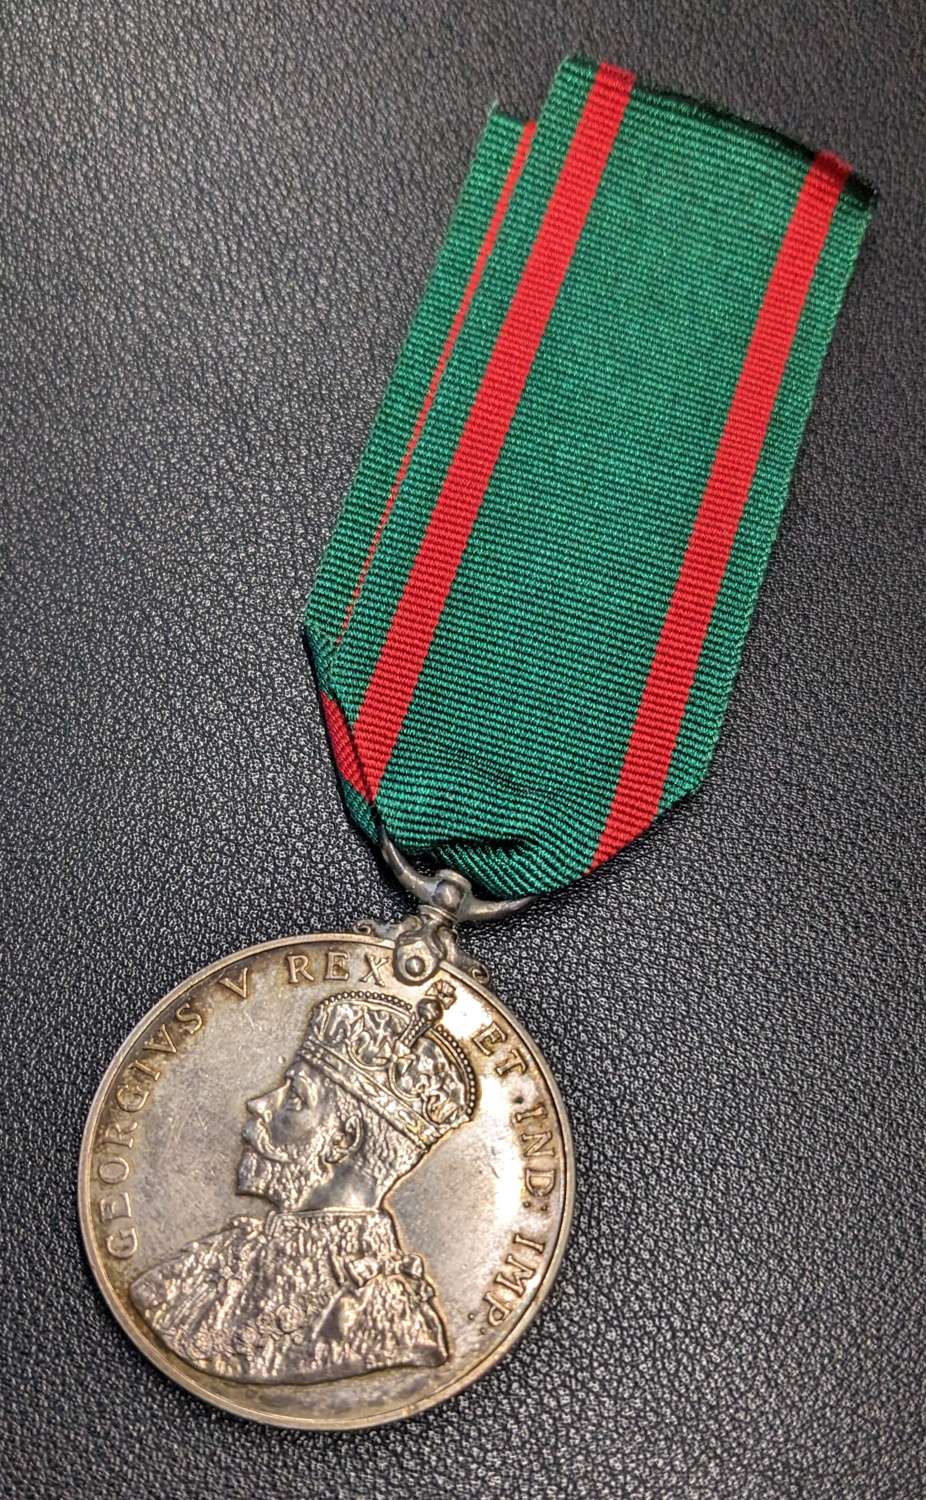 King George Visit to Ireland July 7-12 1911 Medal